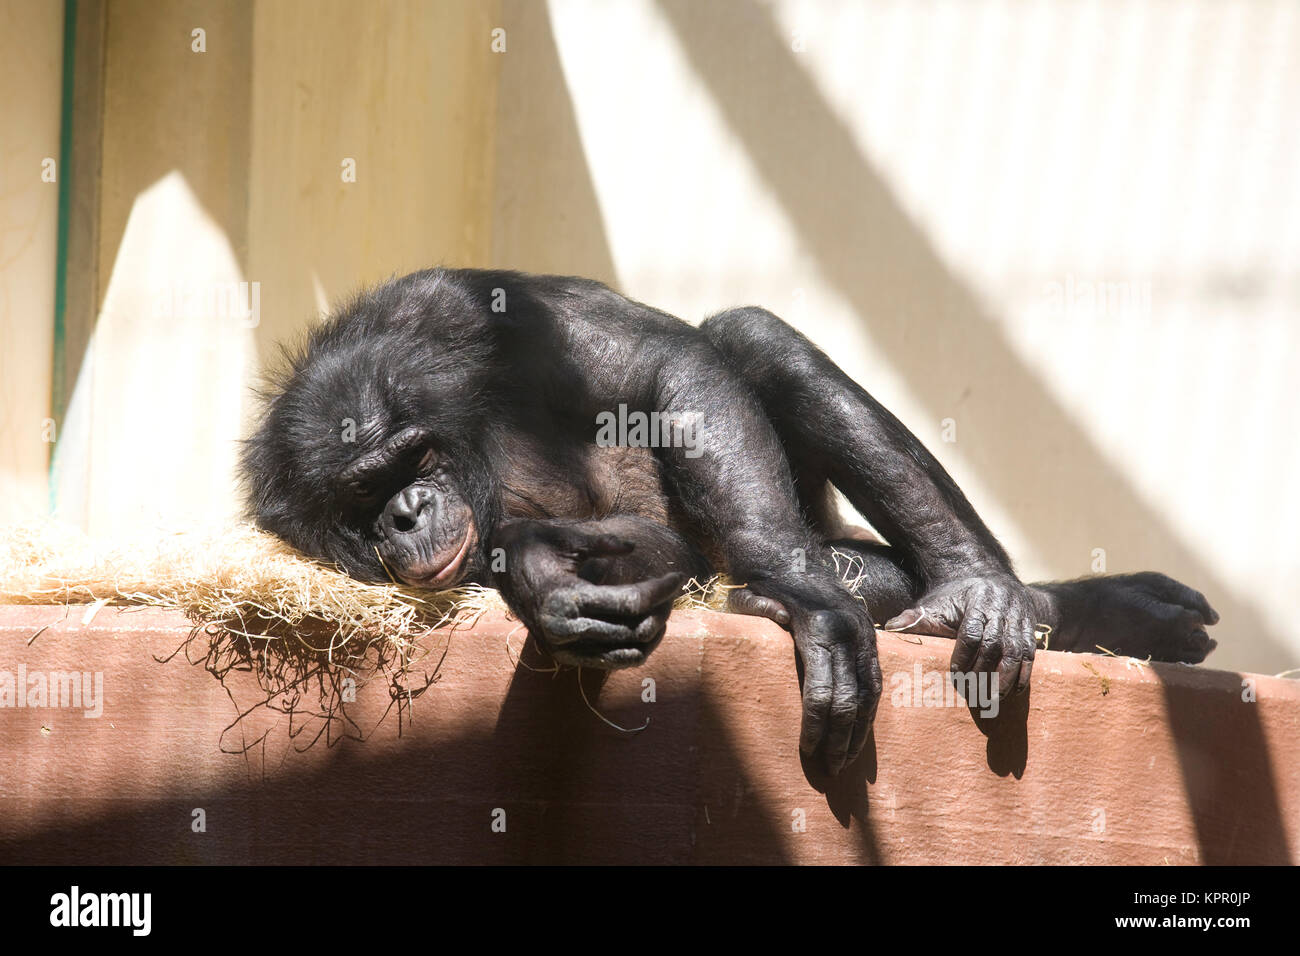 L'Europa, Germania, Wuppertal, lo Zoo, Bonobo monkey (Pan paniscus). Europa, Deutschland, Wuppertal, Zoo di Wuppertal, Bonobo Affe (Pan paniscus). Foto Stock